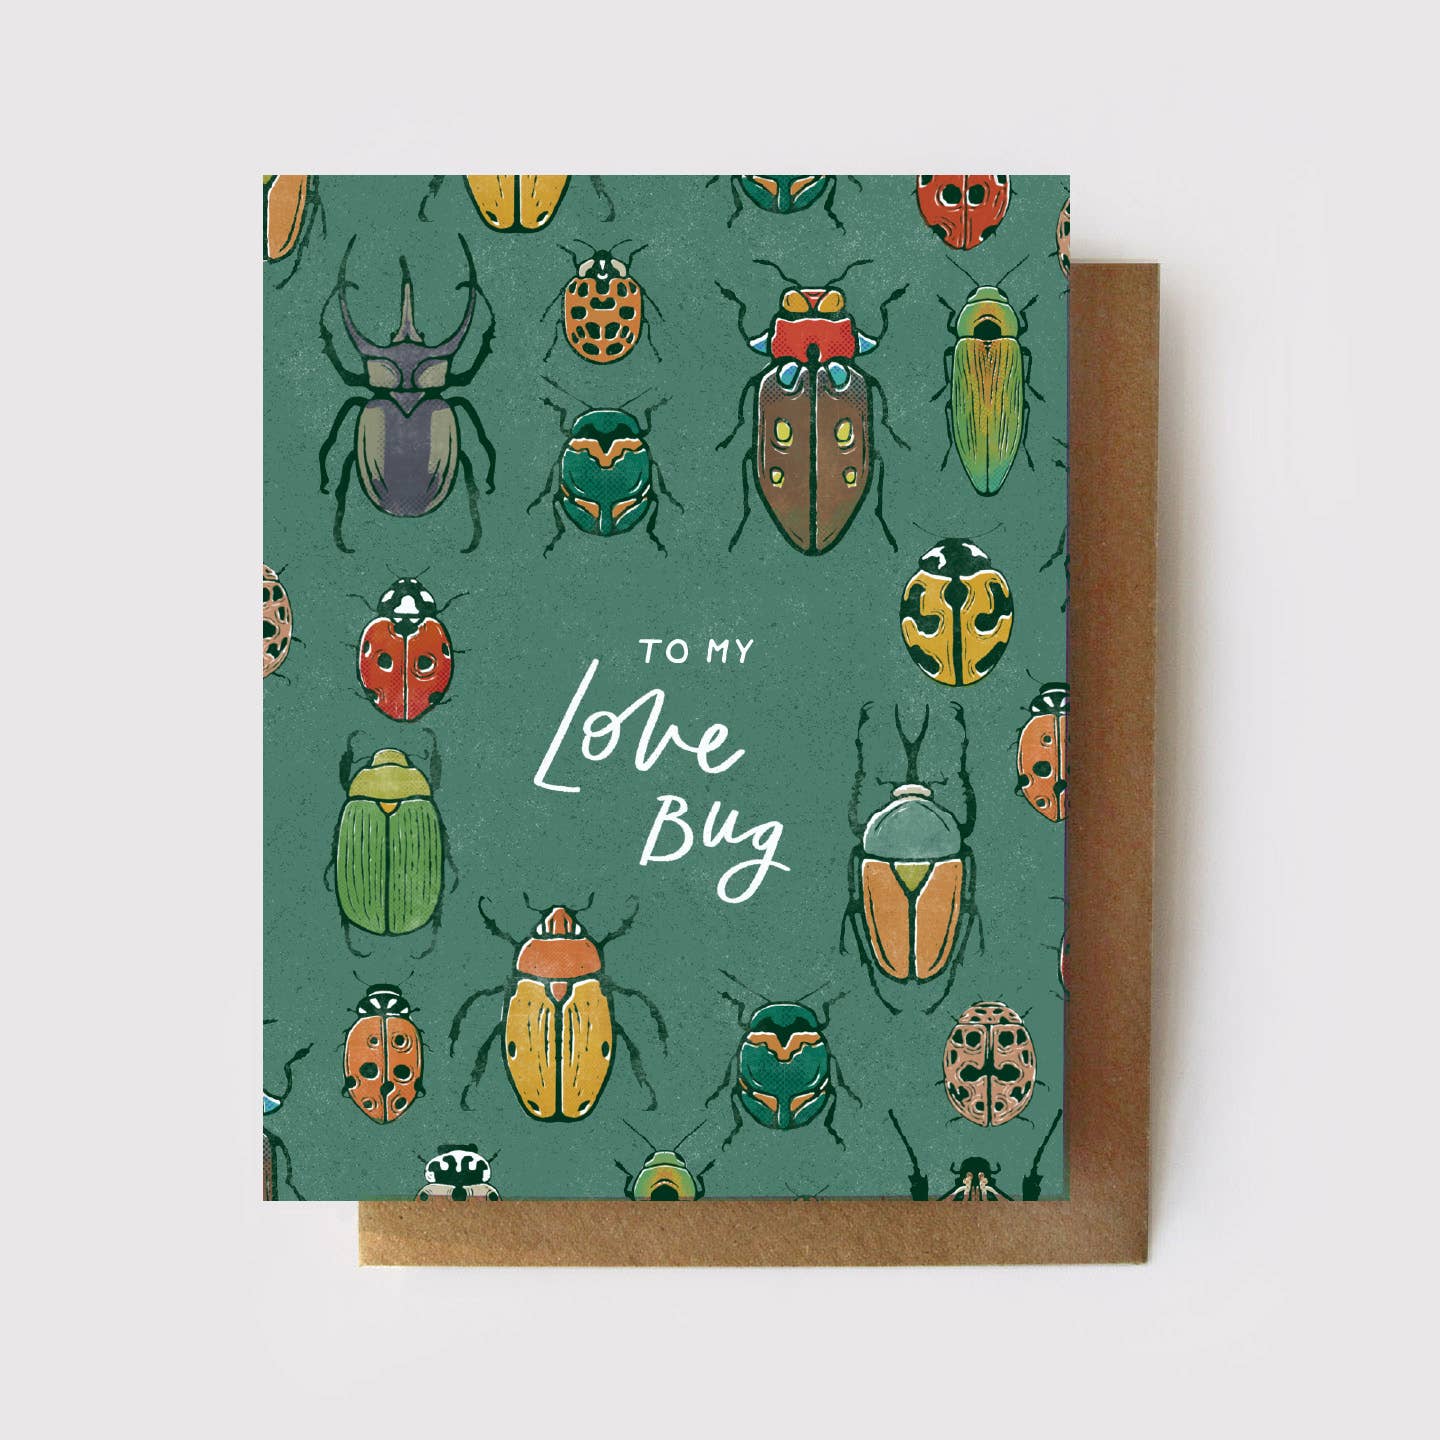 To My Love Bug - Beetles